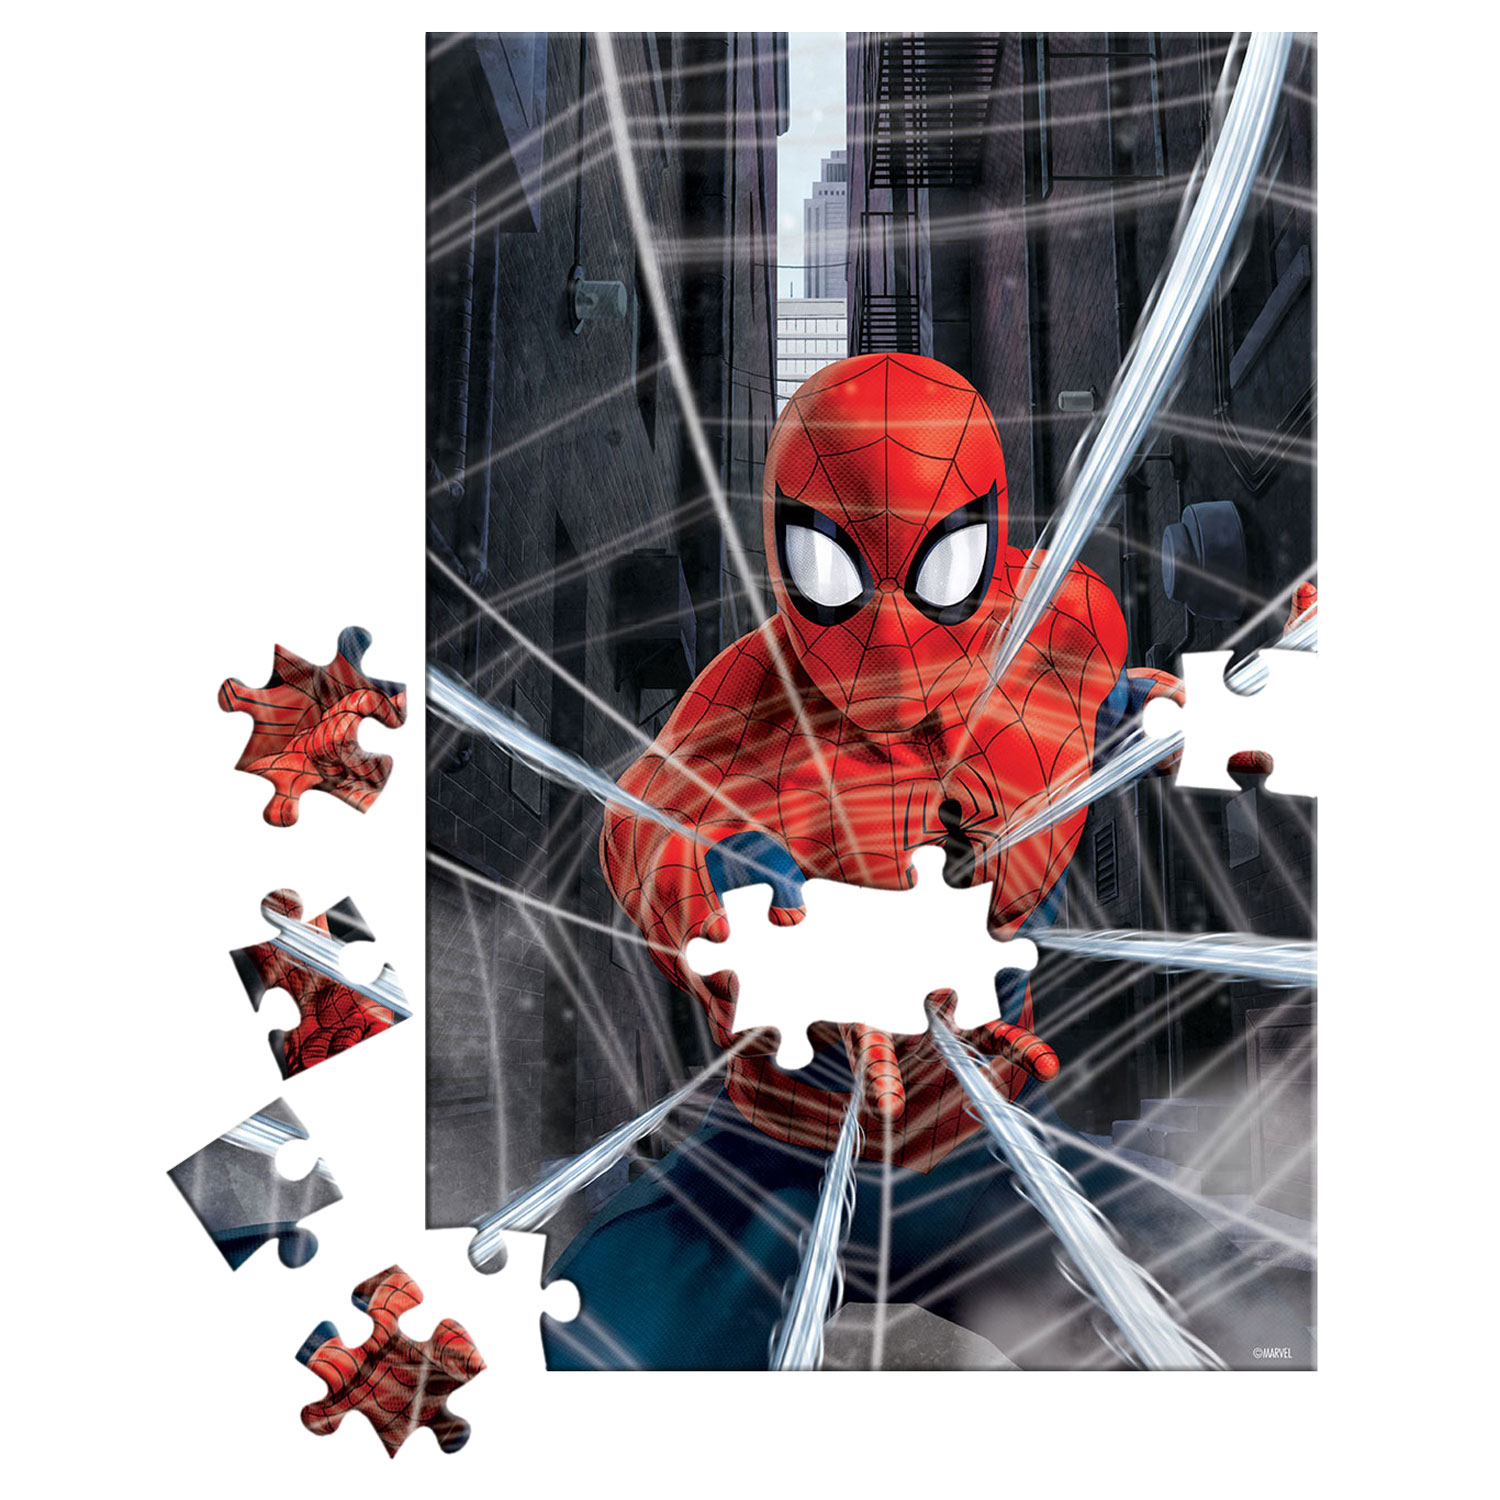 Marvel - Livre de casse-tête lenticulaire, Spider-Man, 300 mcx, Fr